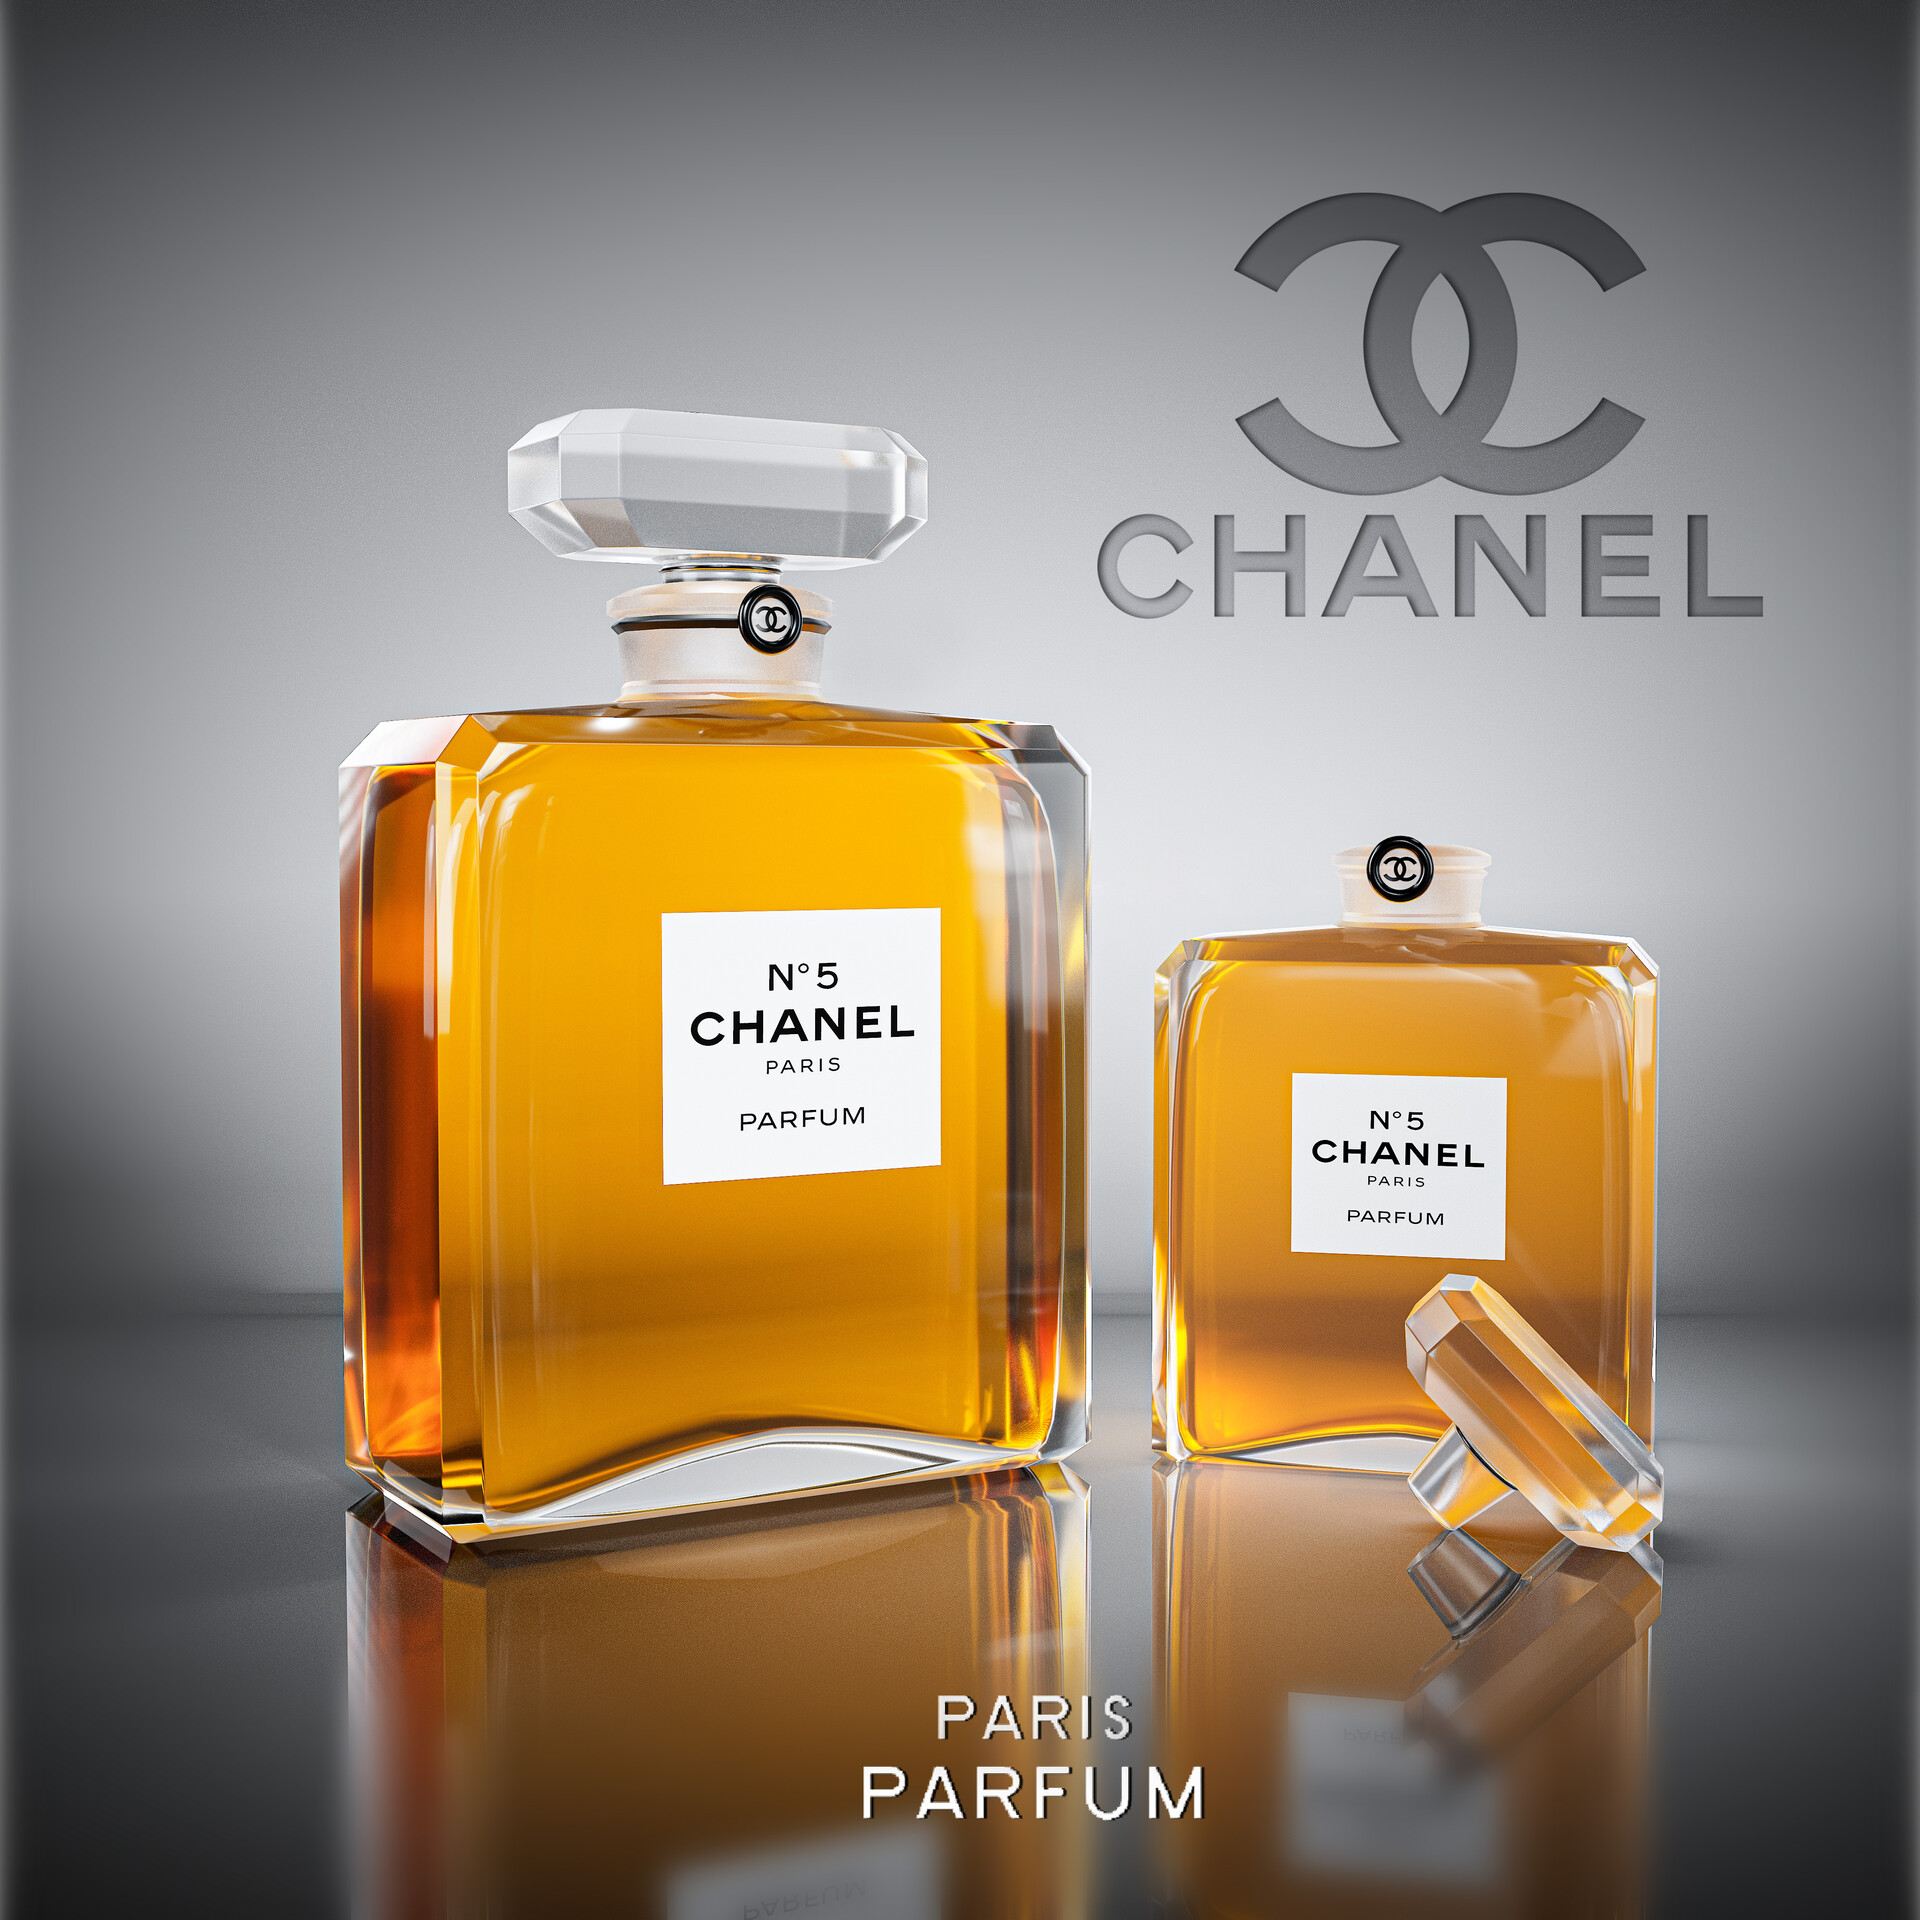 Parfum Chanel No 5 3D Model $34 - .3ds .c4d .fbx .ma .obj .max - Free3D